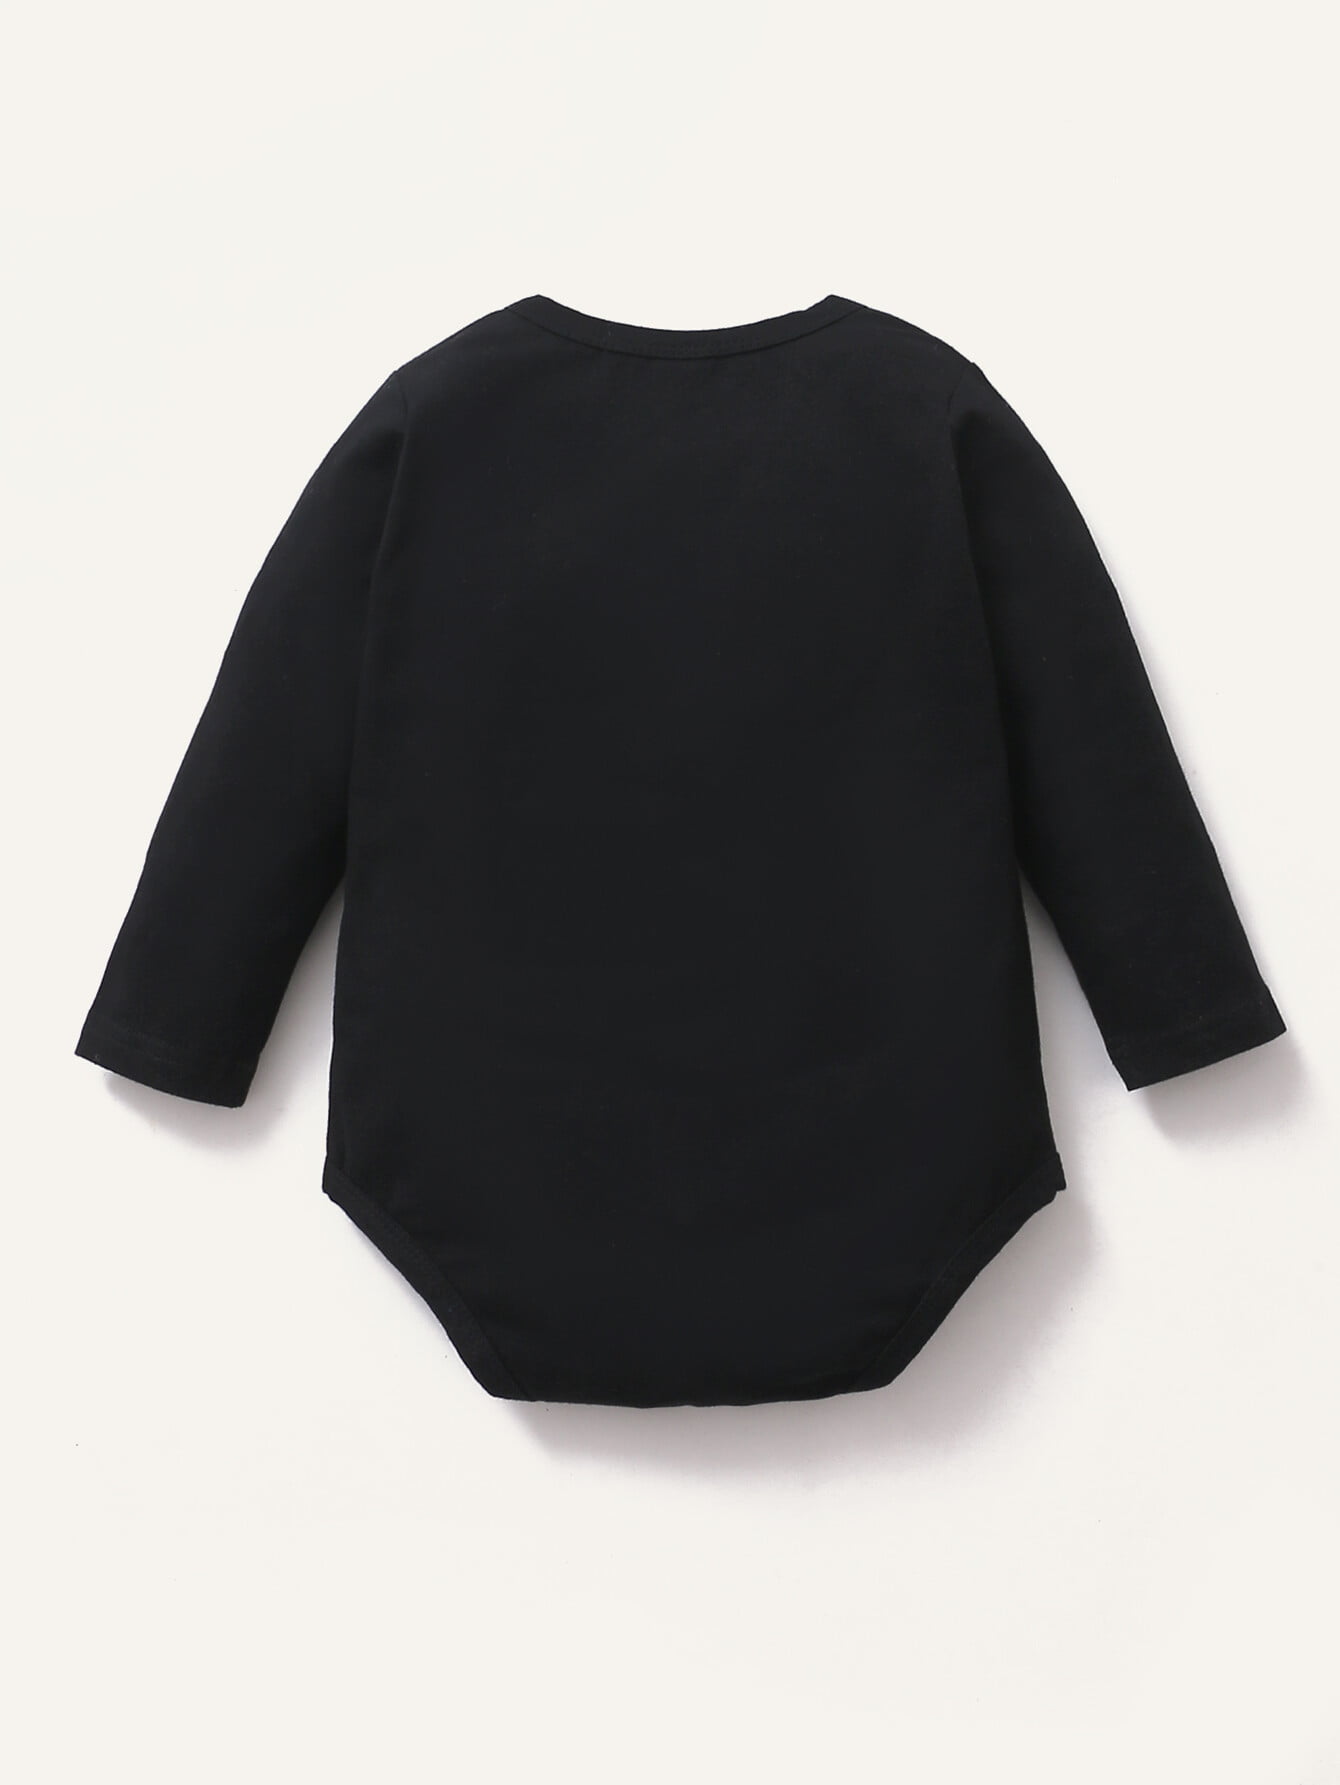 Various Sizes Baby's Black Long Sleeved Sleepsuit/Romper 